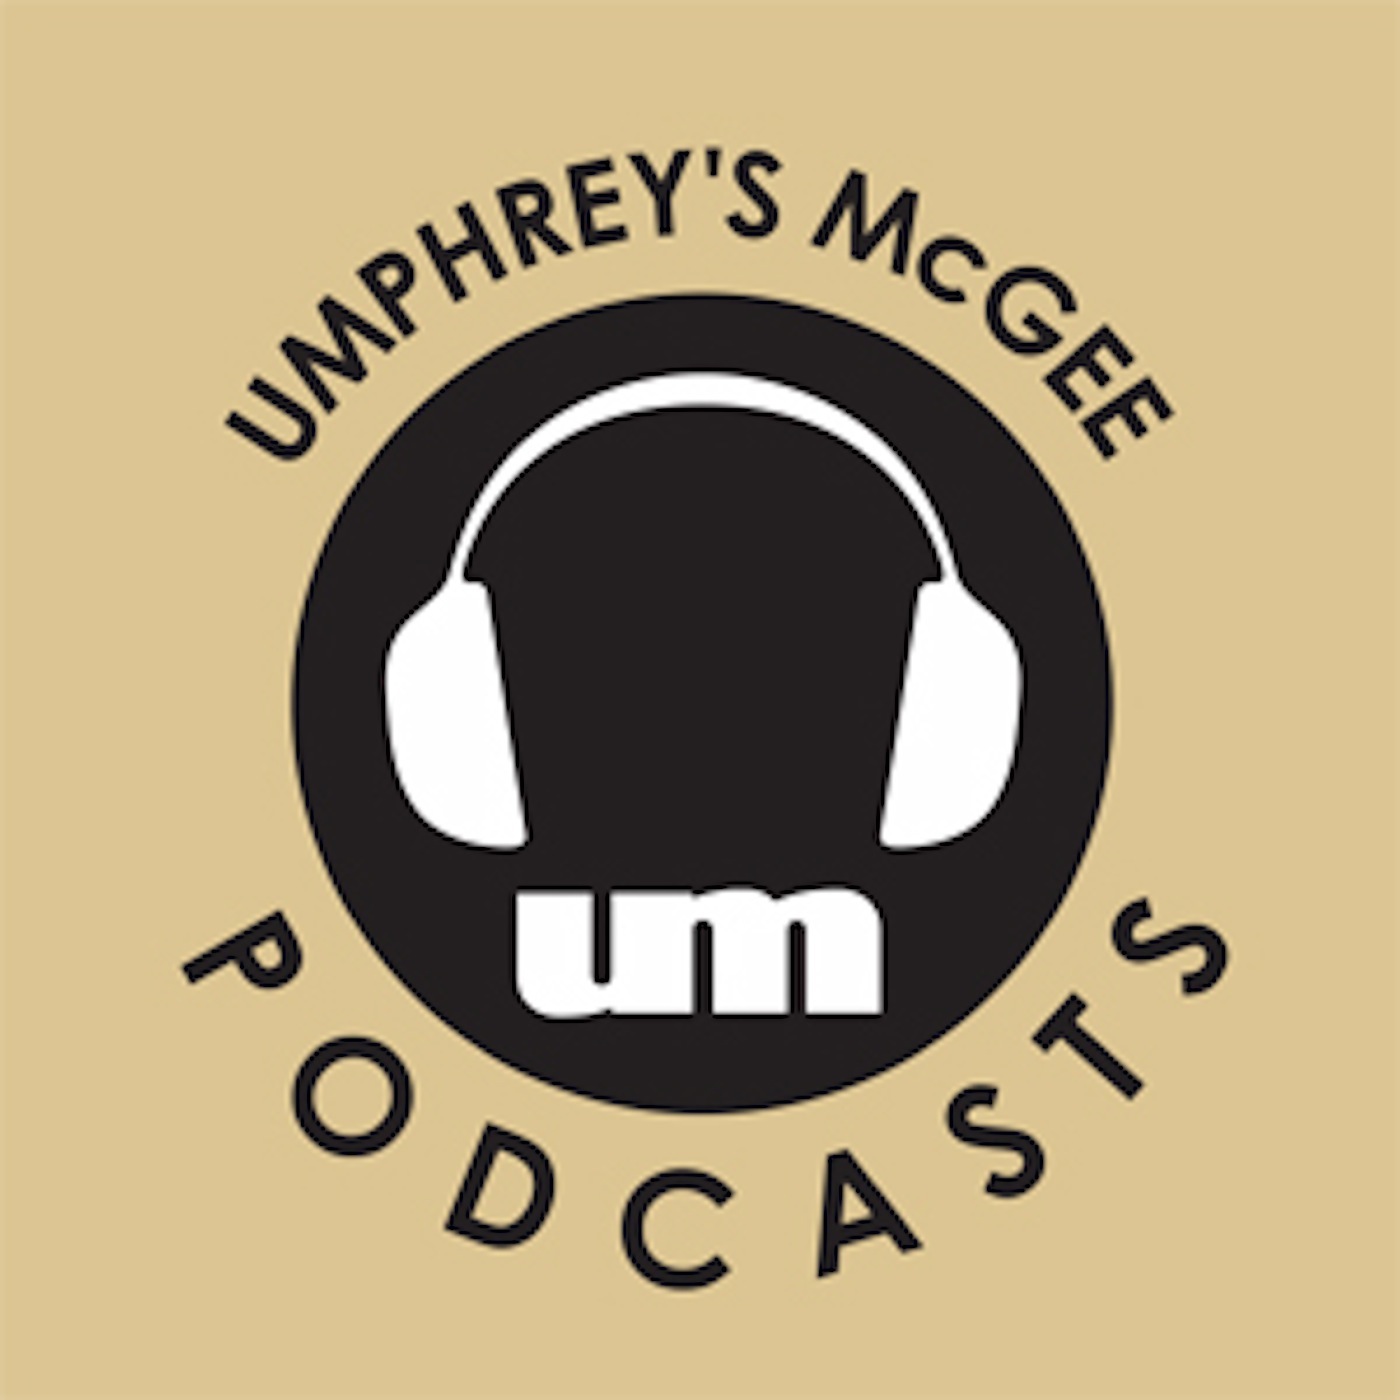 Umphrey's McGee: Talking Circles